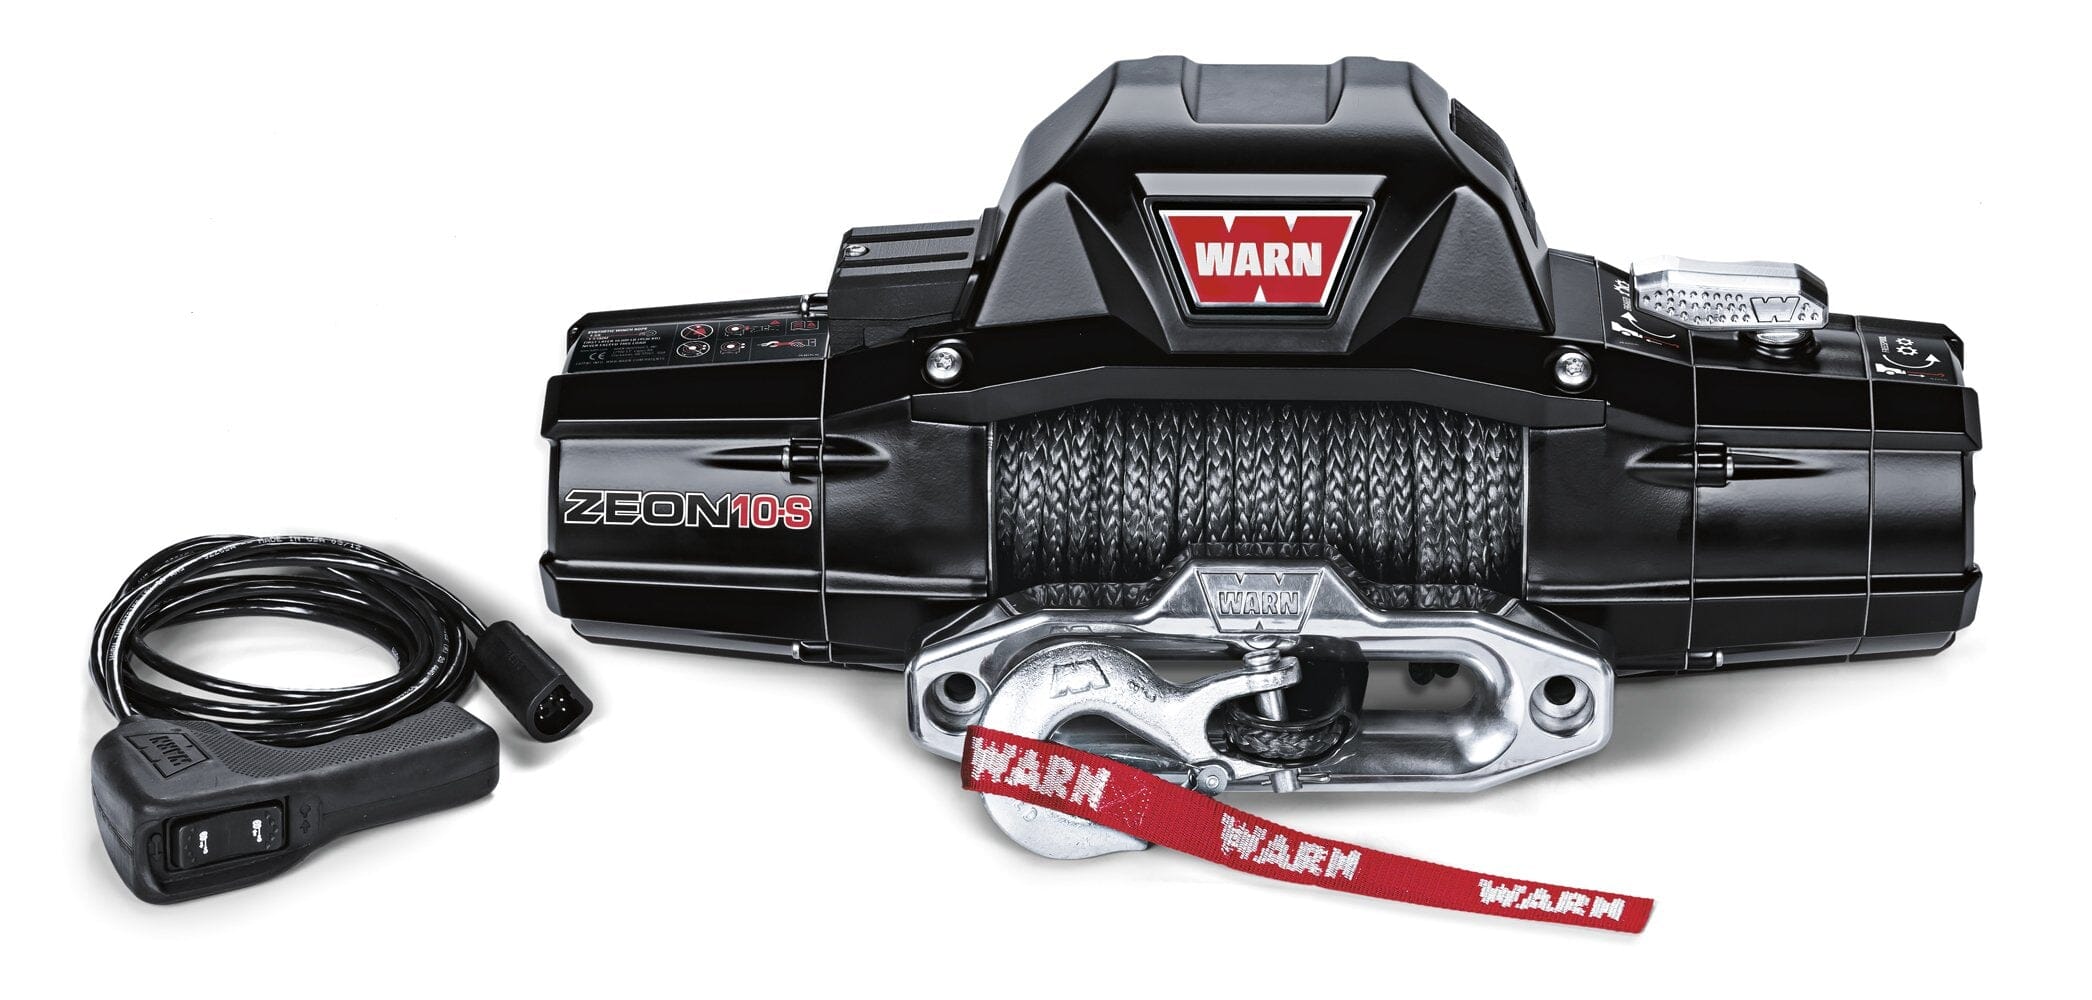 WARN Zeon 10 Winch Recovery Gear Warn Zeon 10-S Platinum 